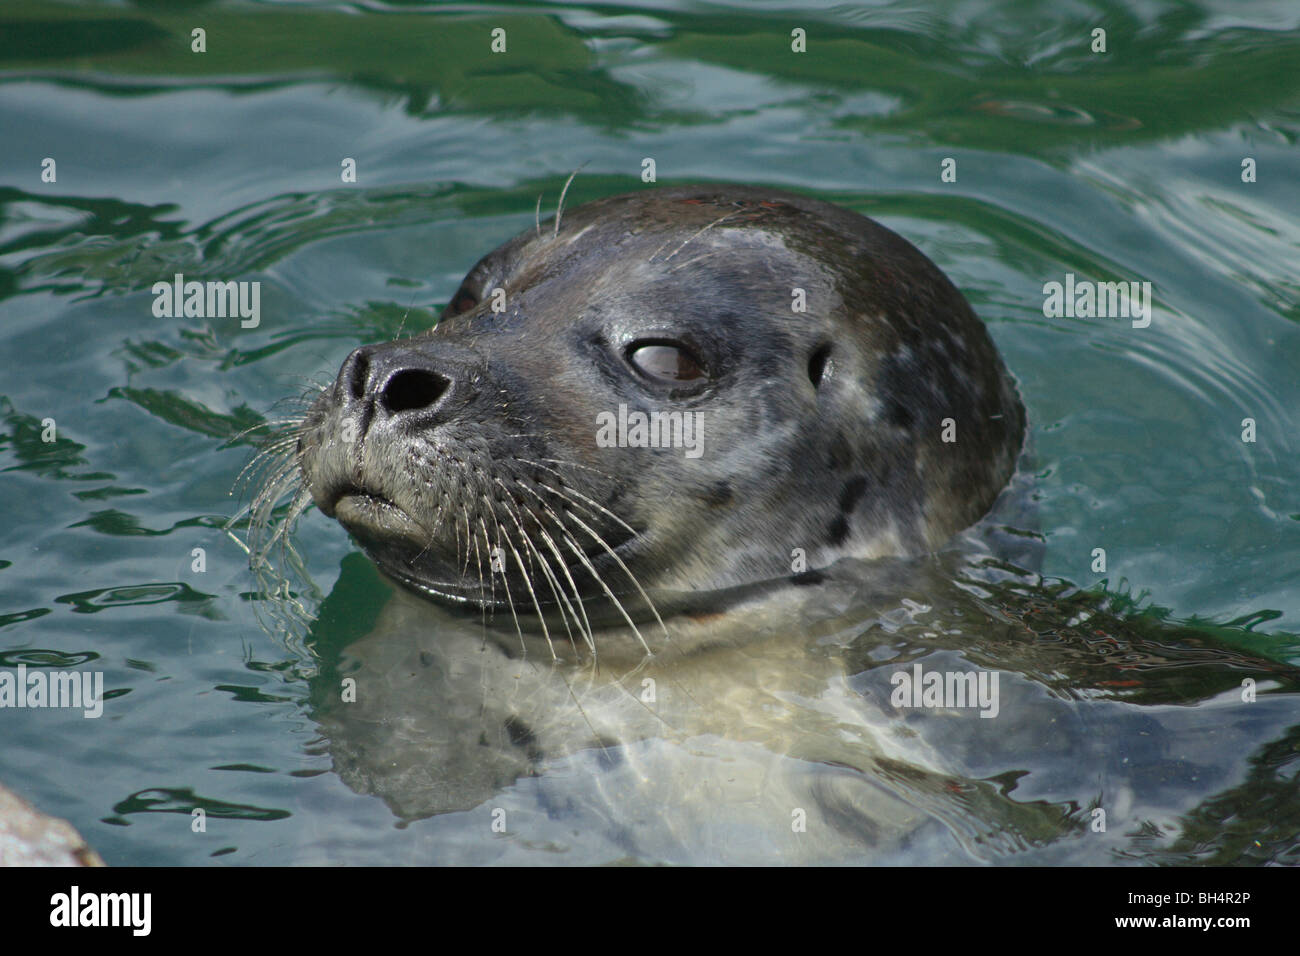 Common seal (Phoca vitulina) swimming in water. Stock Photo